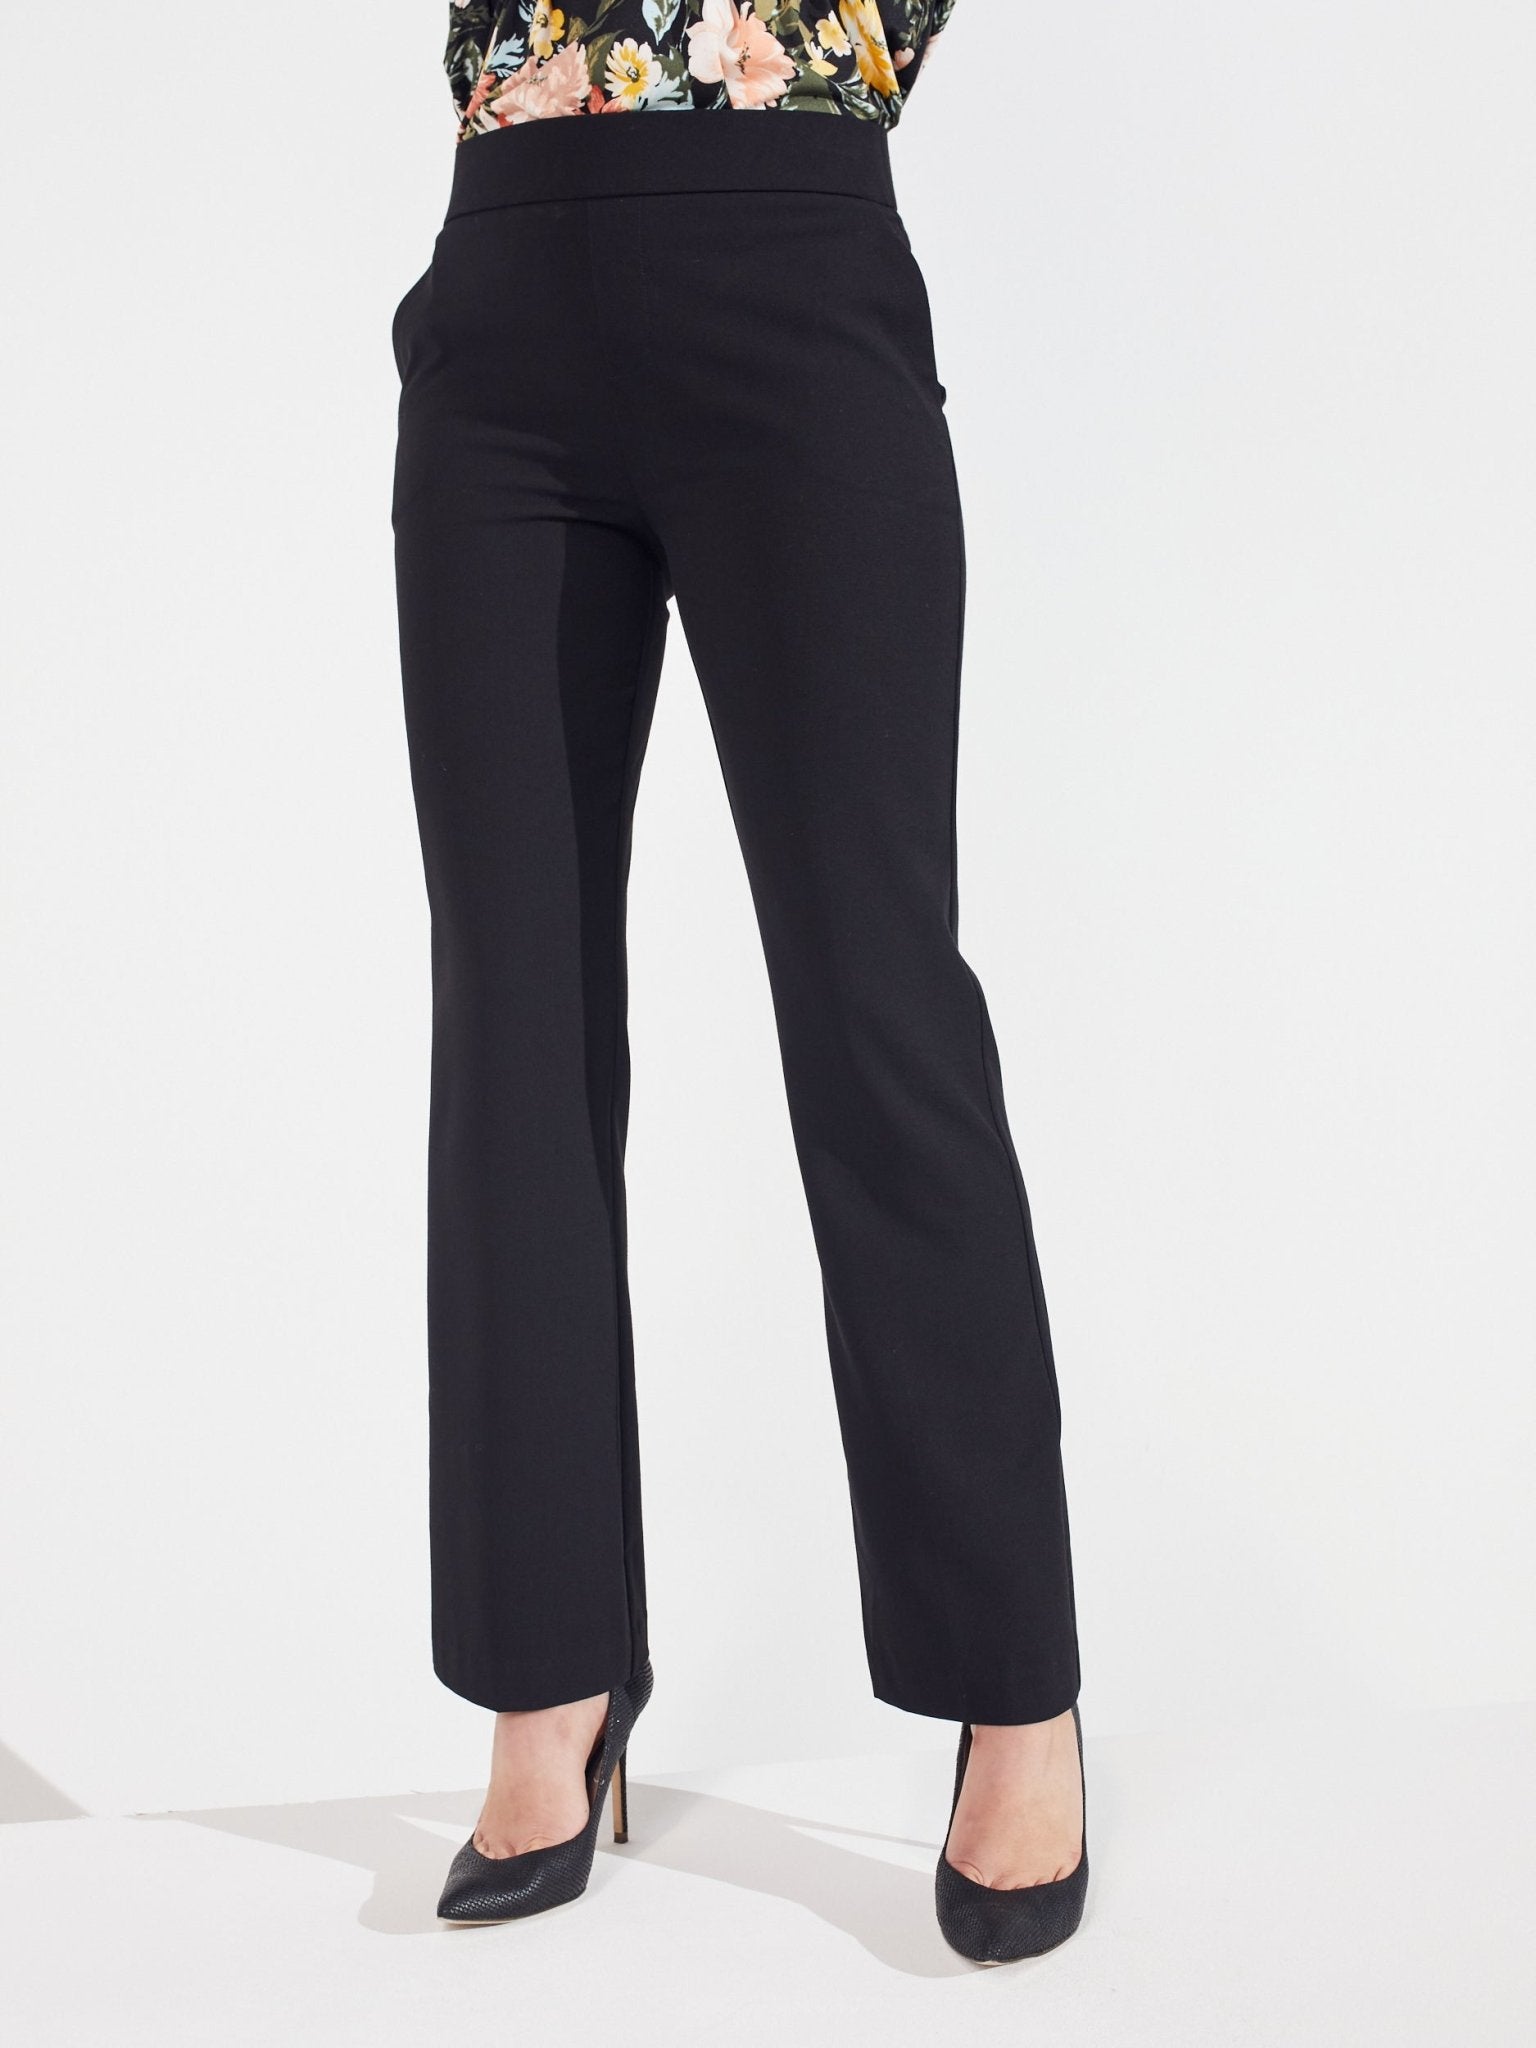 Women's Low Cut jeans Bootcut trousers denim black stretch with belt Size  6-14 | eBay